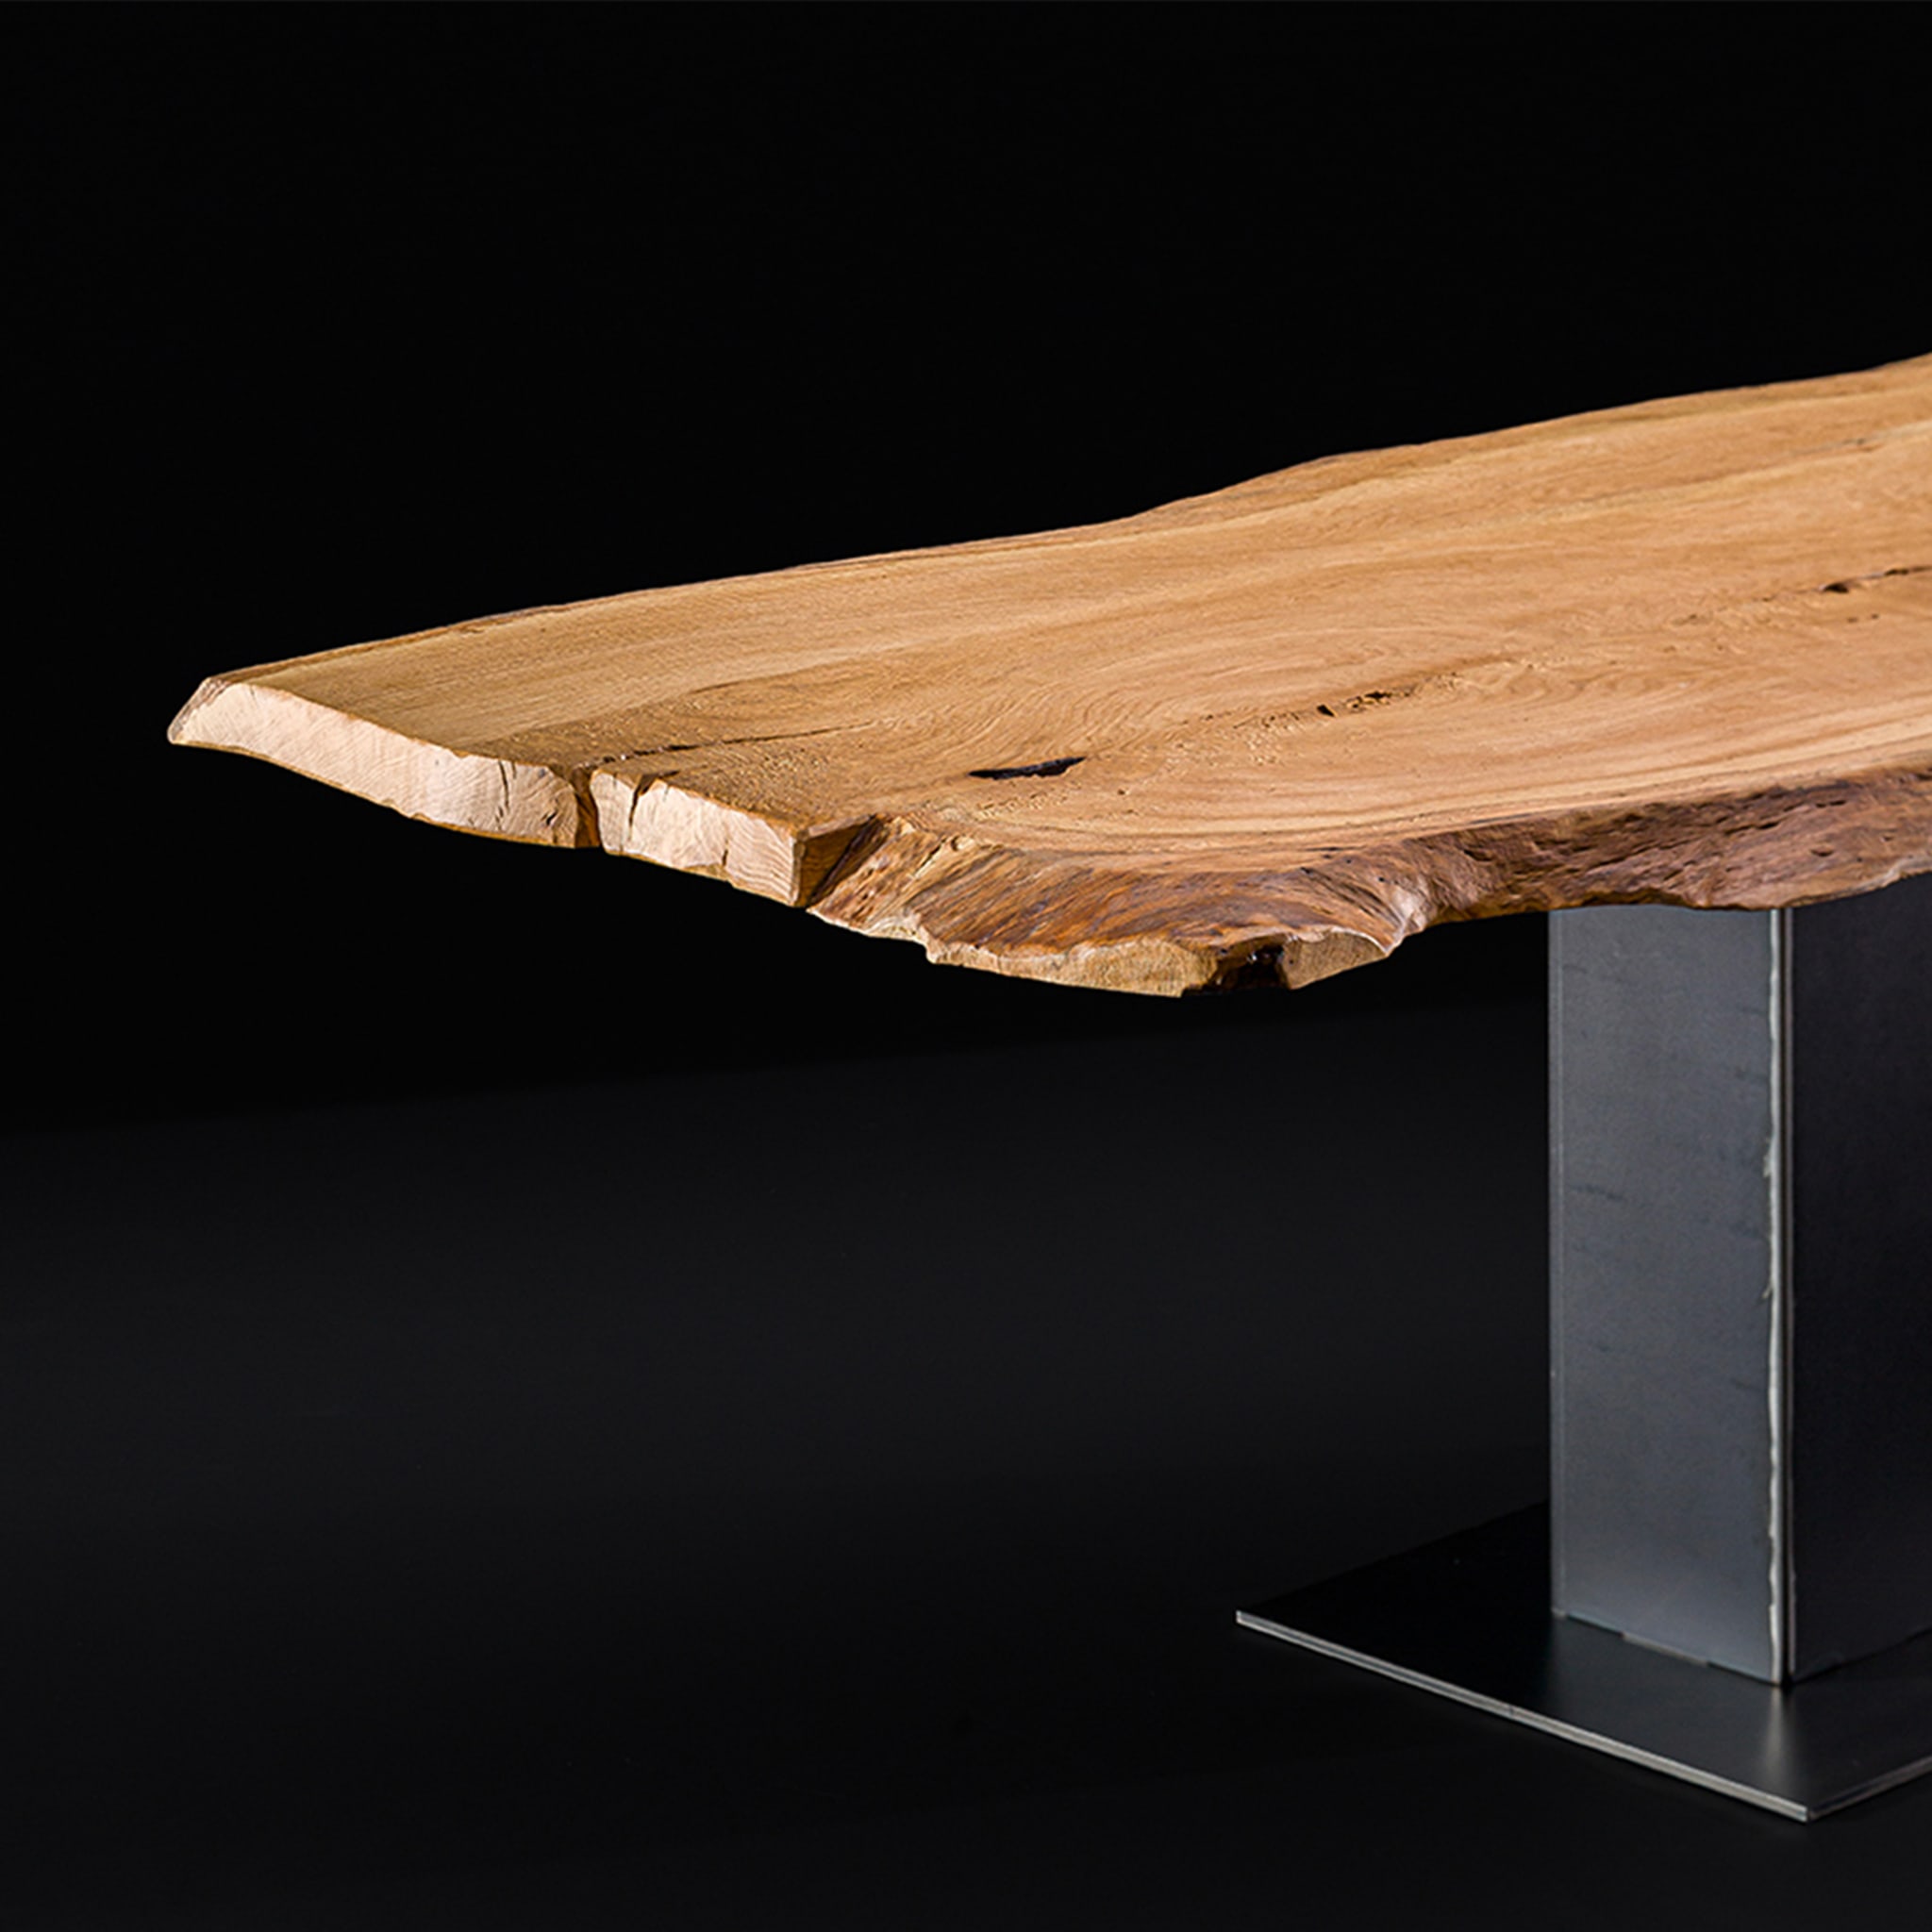 Oak dining table #1 - Alternative view 2